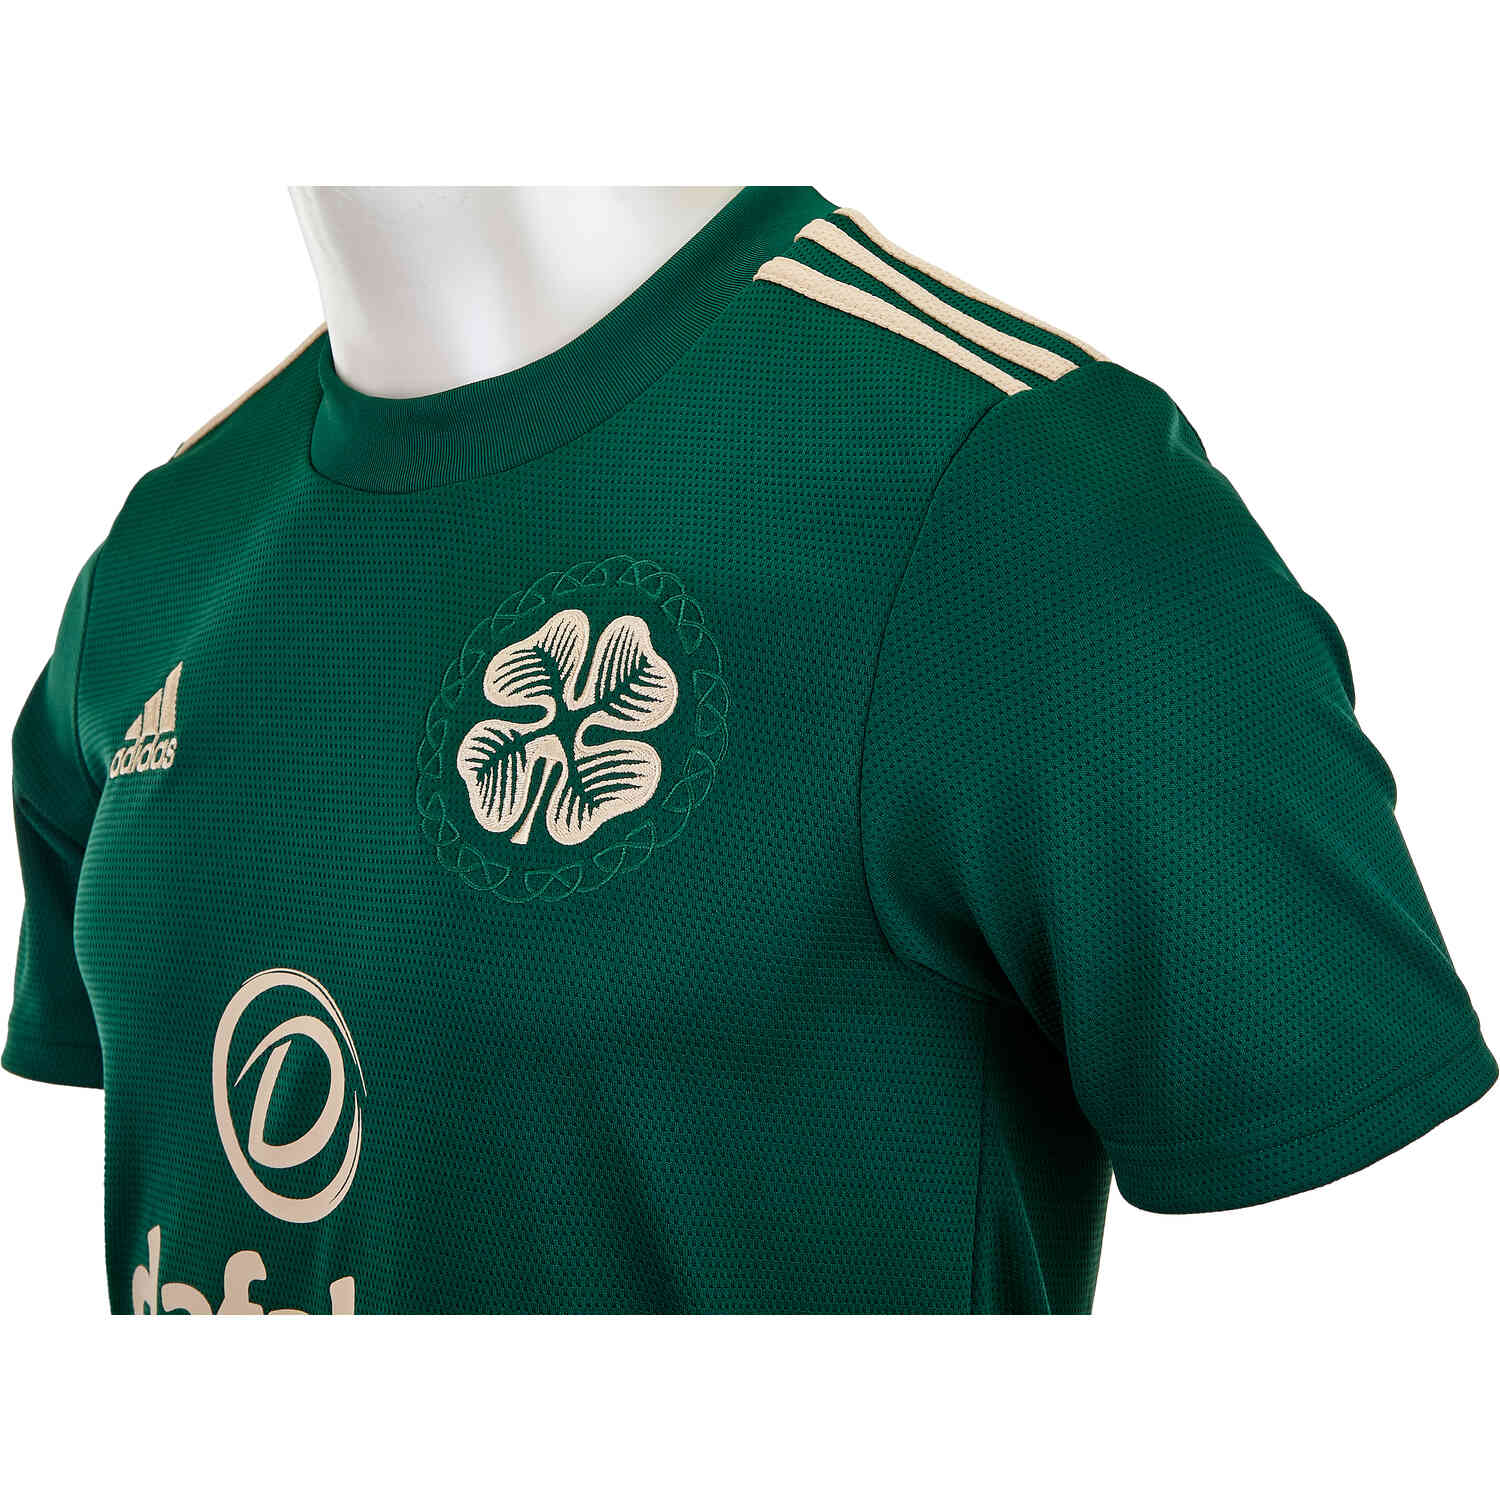 The new adidas Celtic 2020/2021 shirt